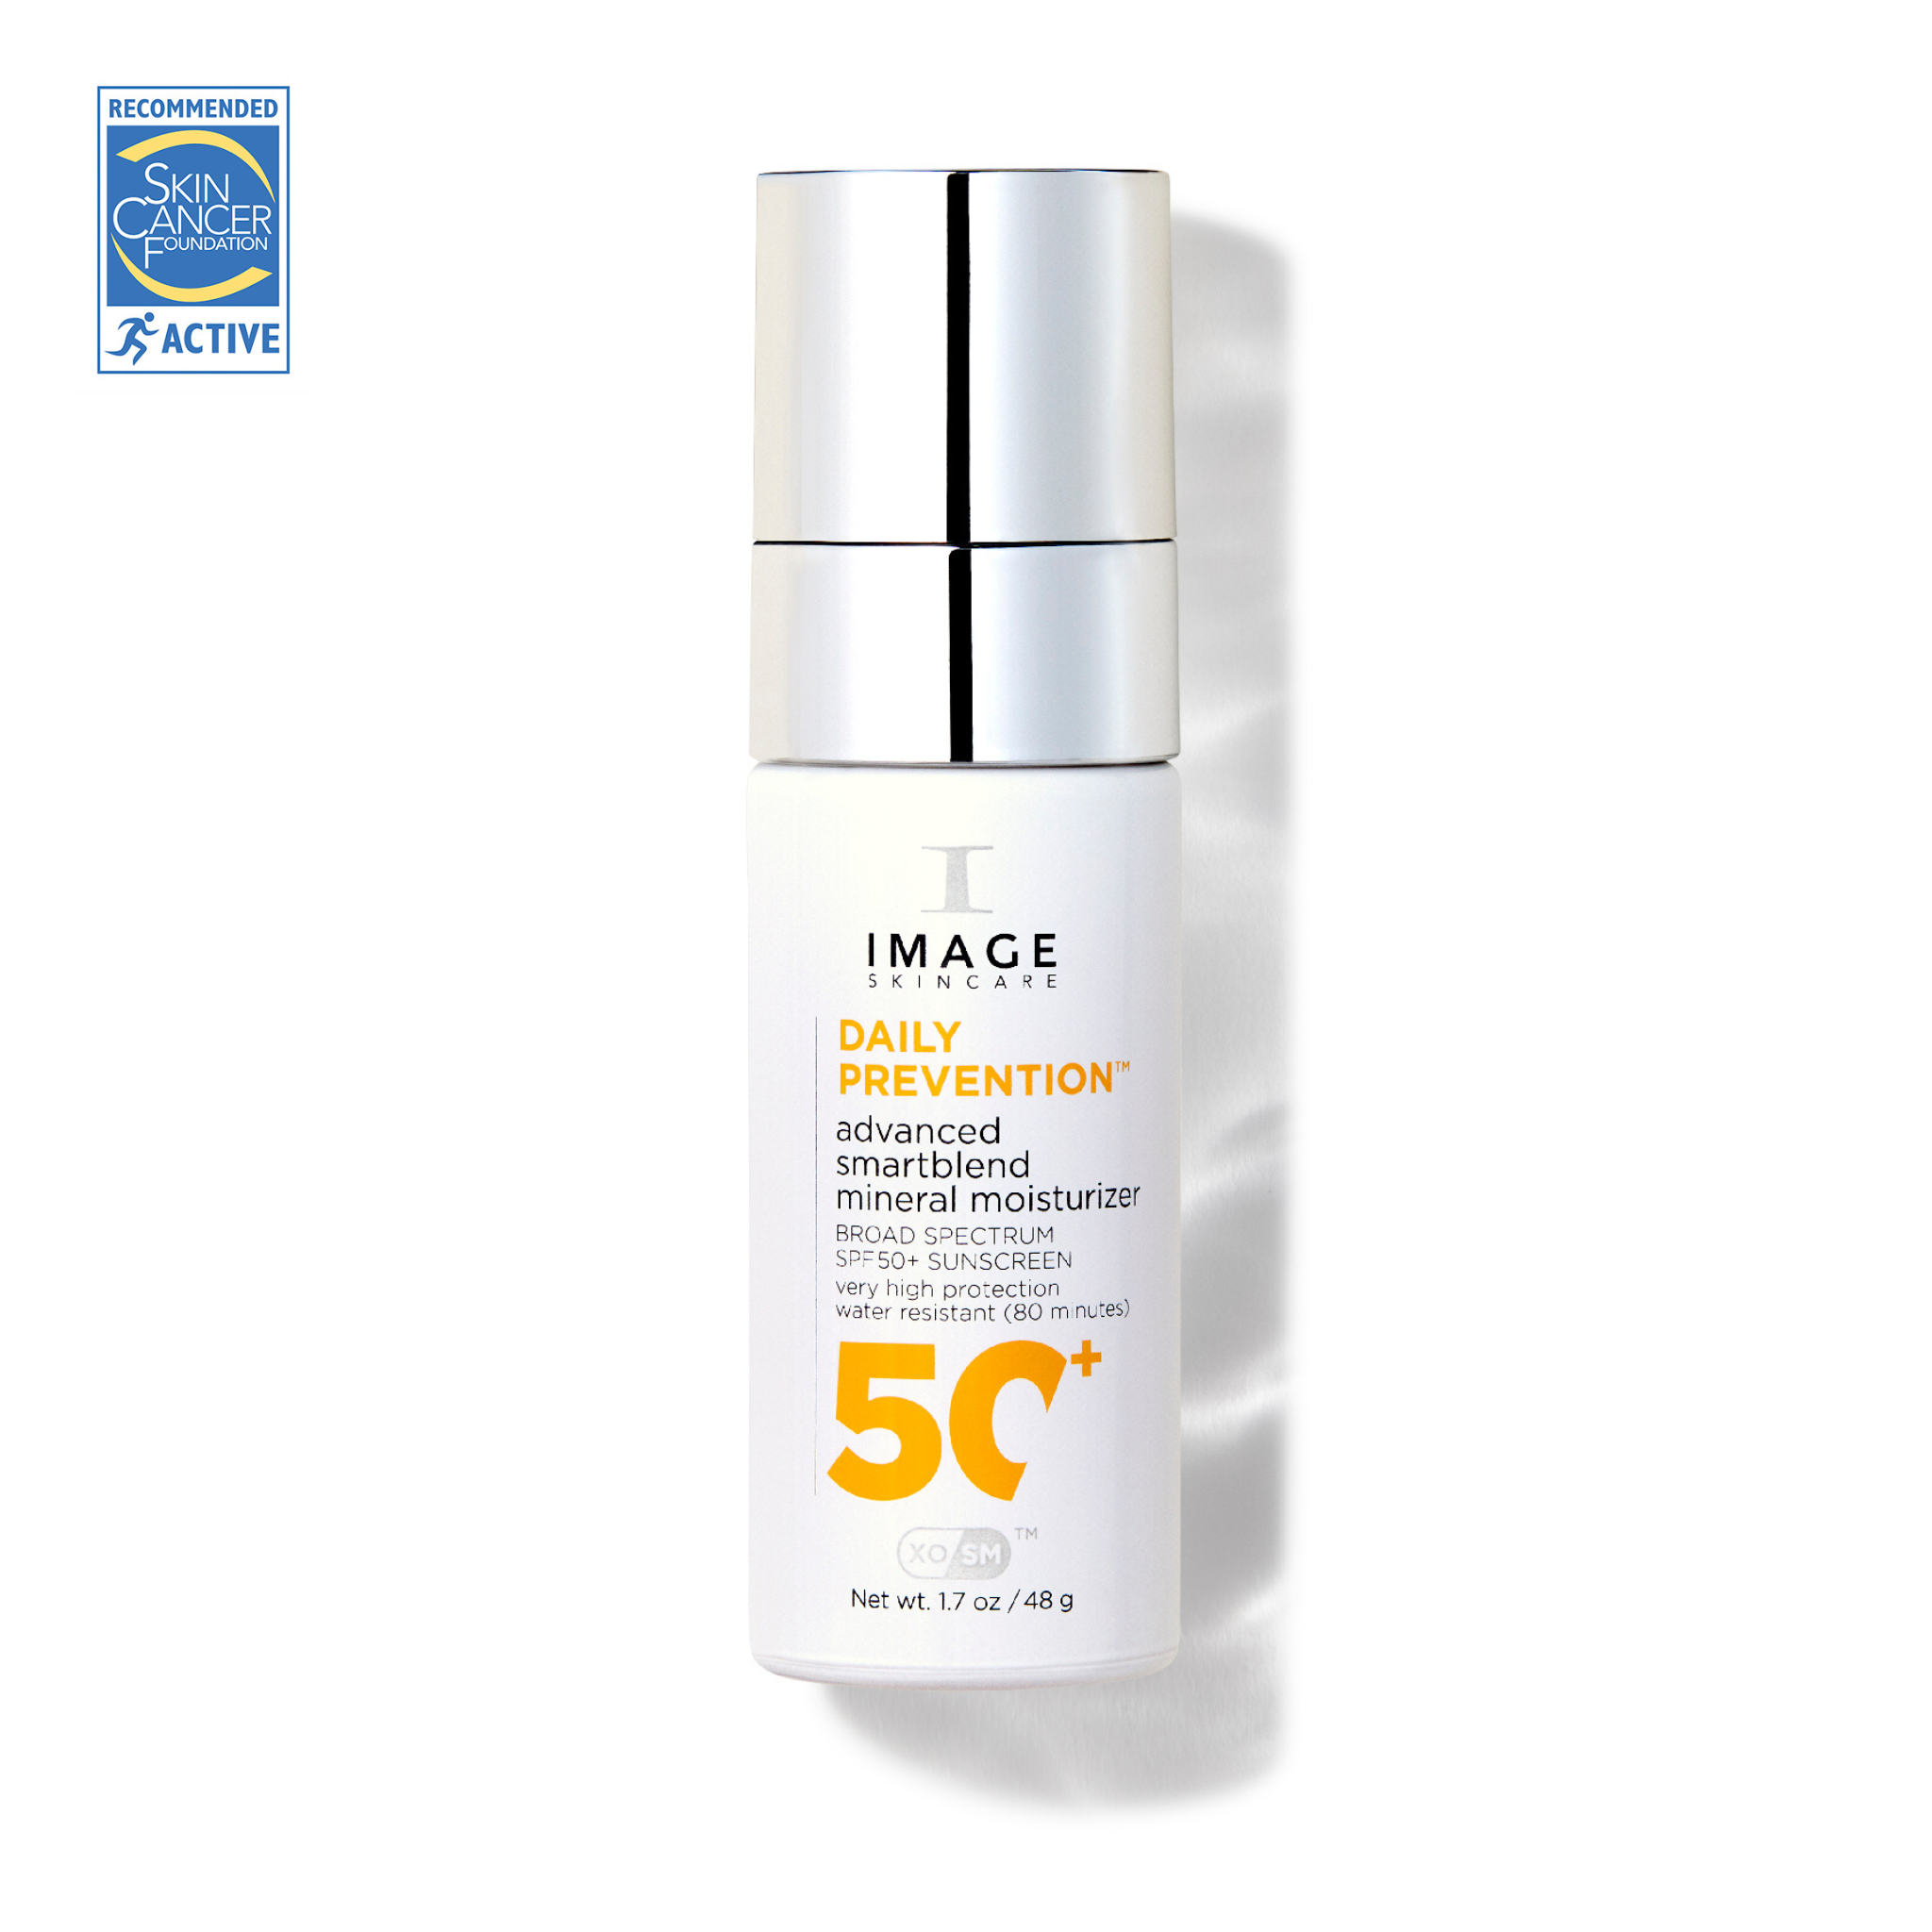 Image Skincare Daily Prevention Advanced Smartblend Mineral Moisturiser SPF 50+